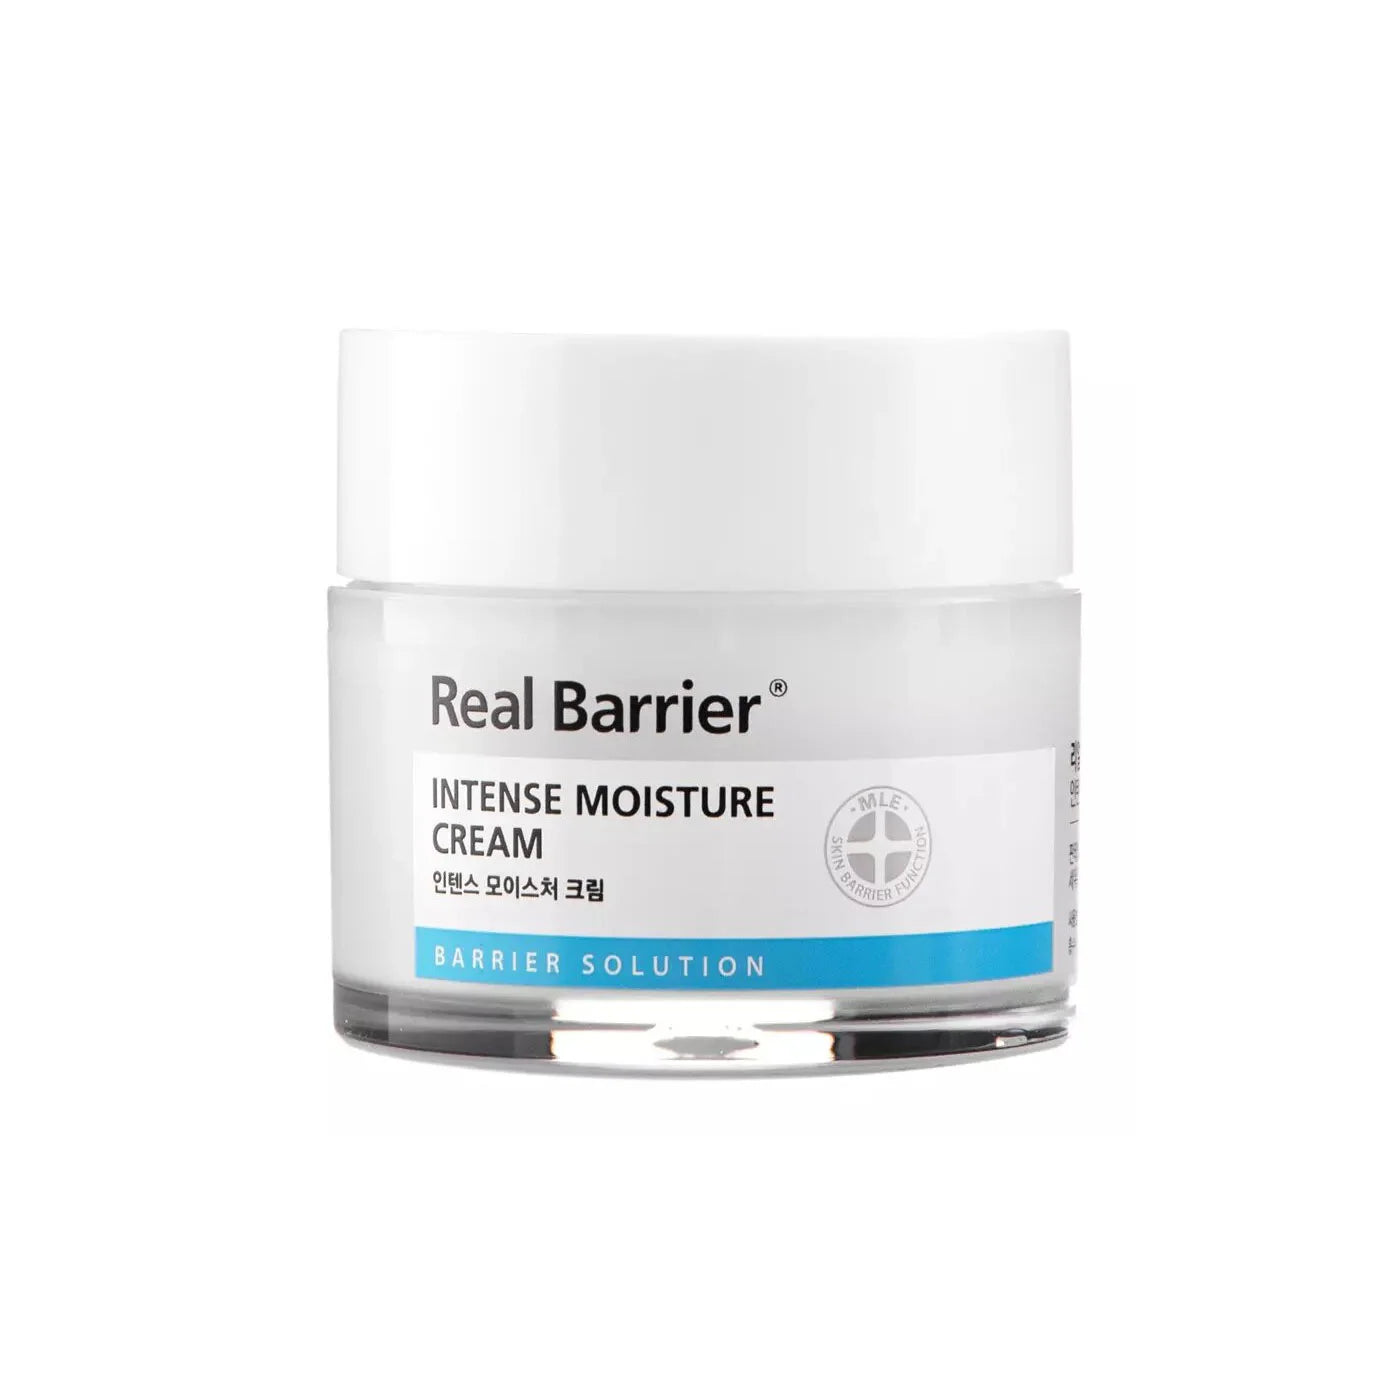 Real Barrier Intense Moisture Cream Korean moisturizer for dry sensitive irritated skin redness eczema rosacea flaky rough skin texture K Beauty World